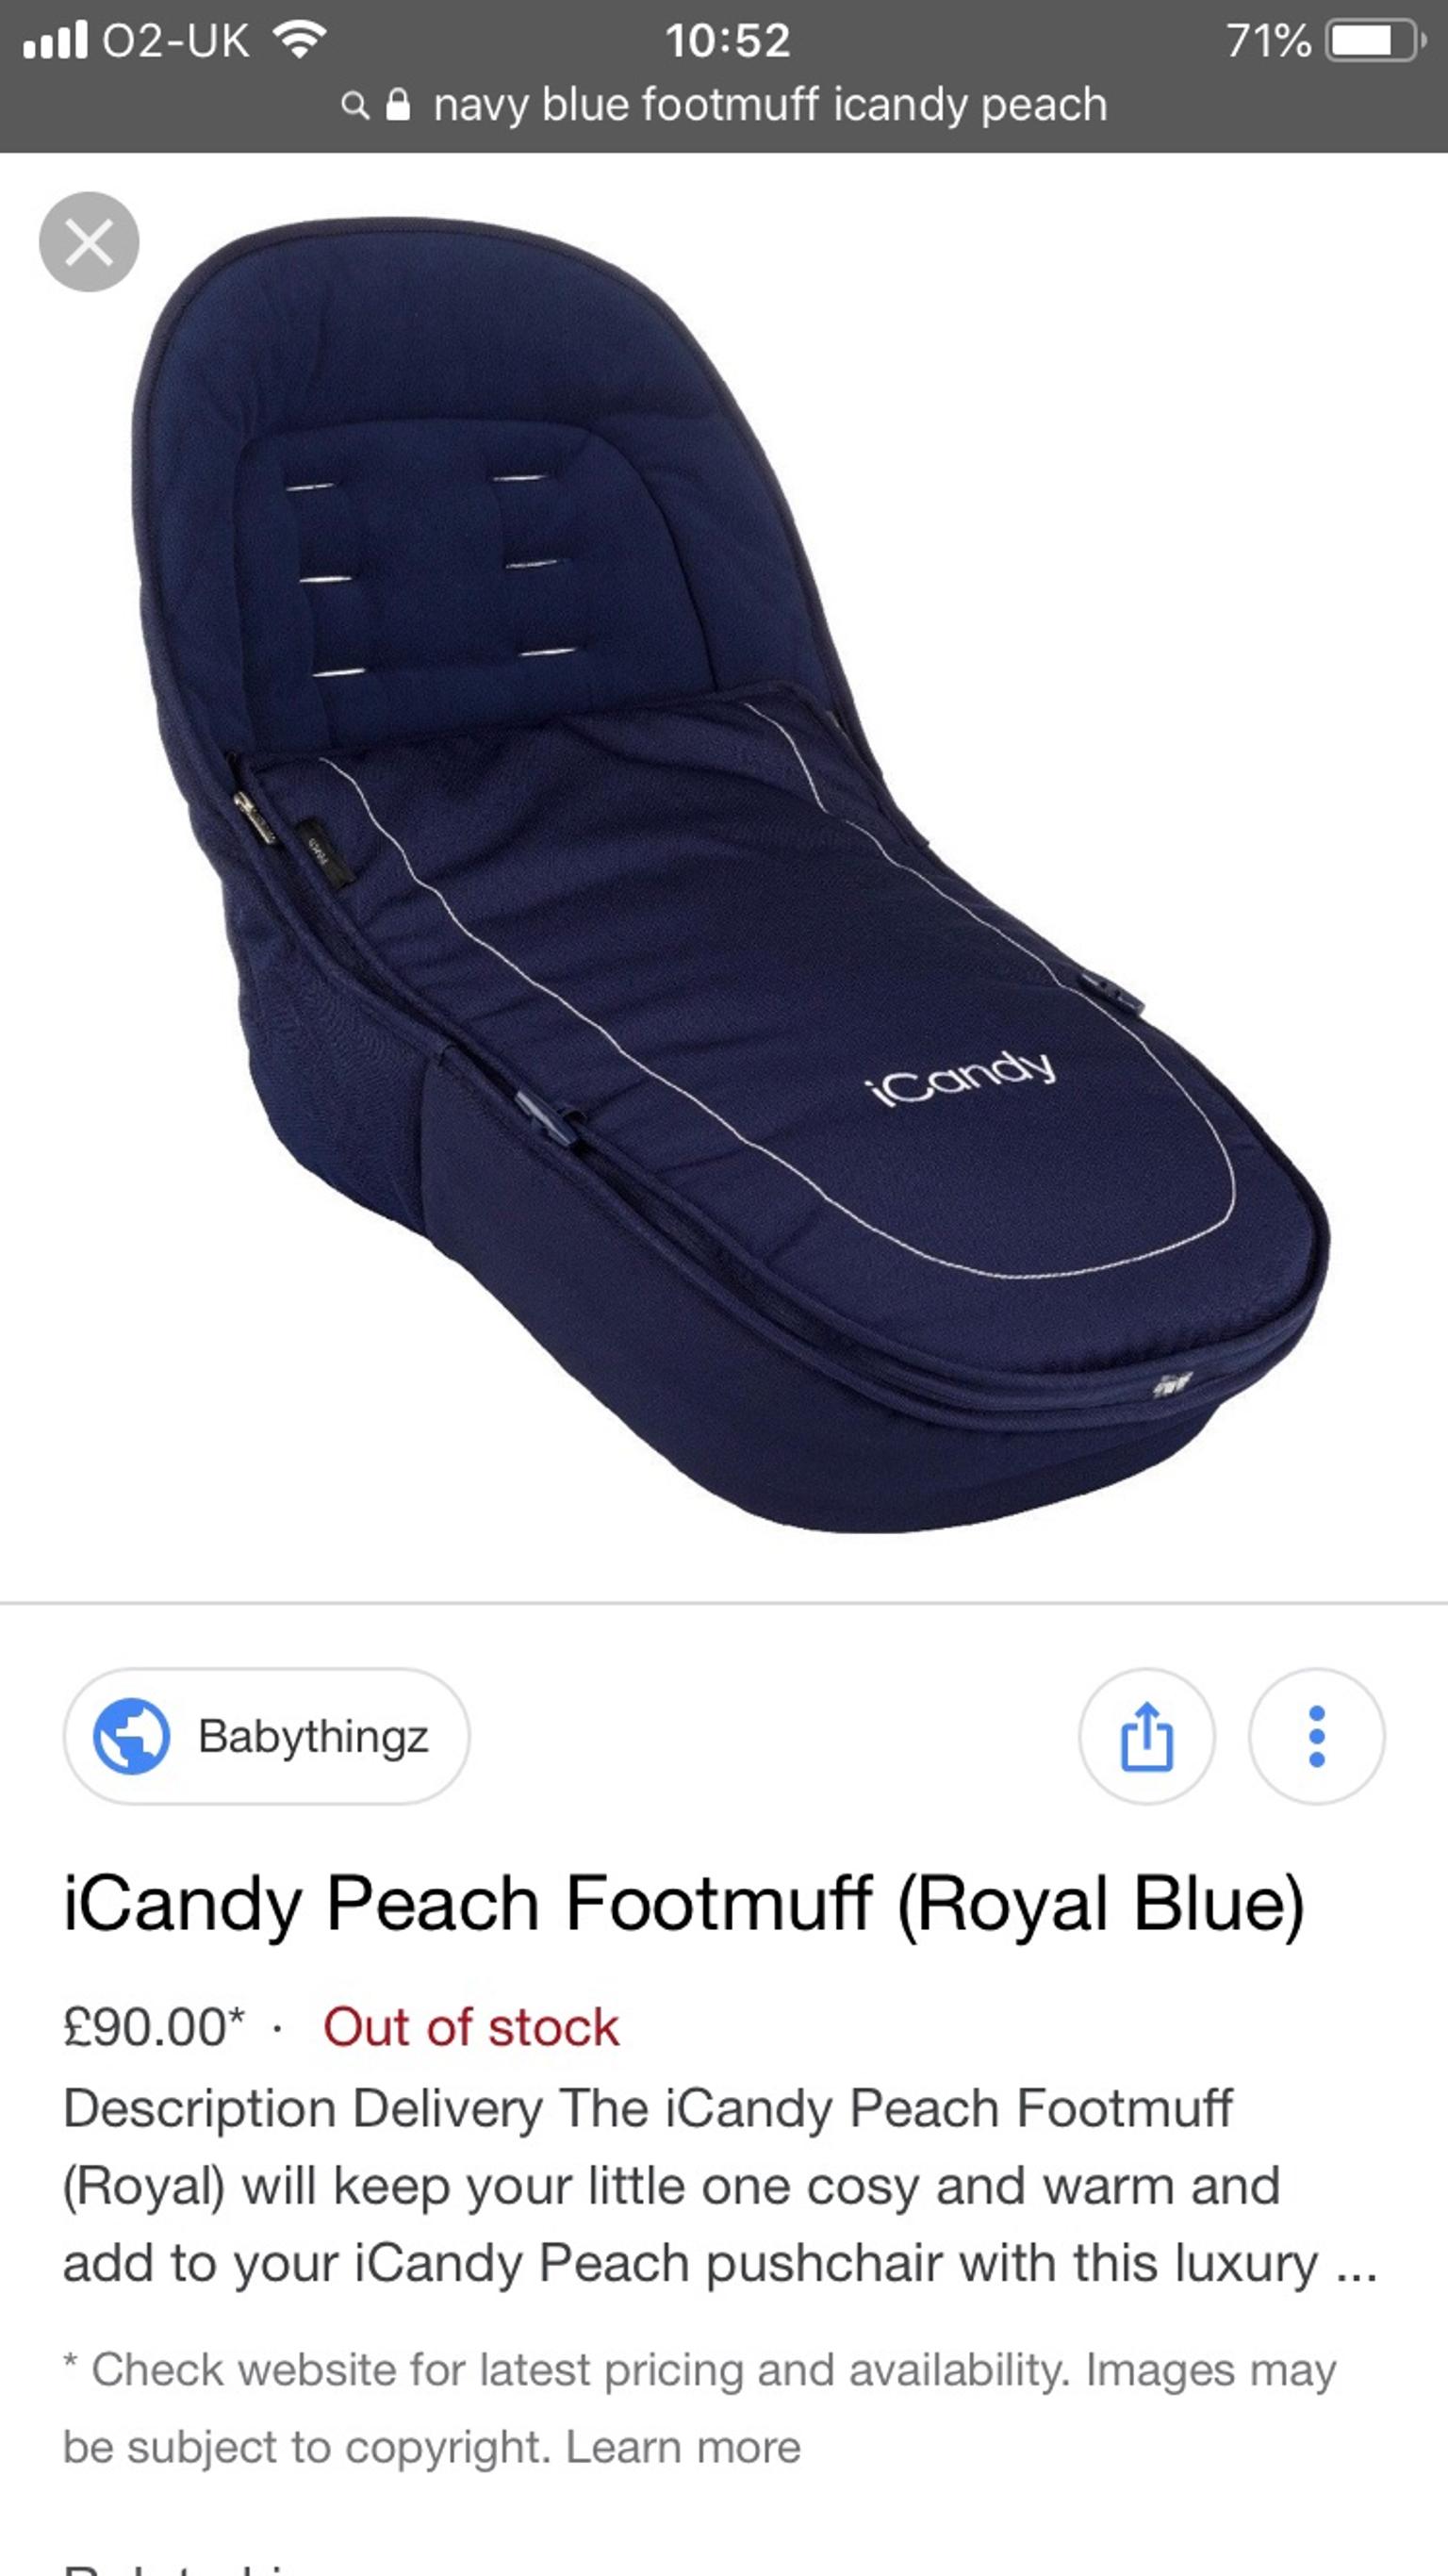 icandy peach royal blue footmuff